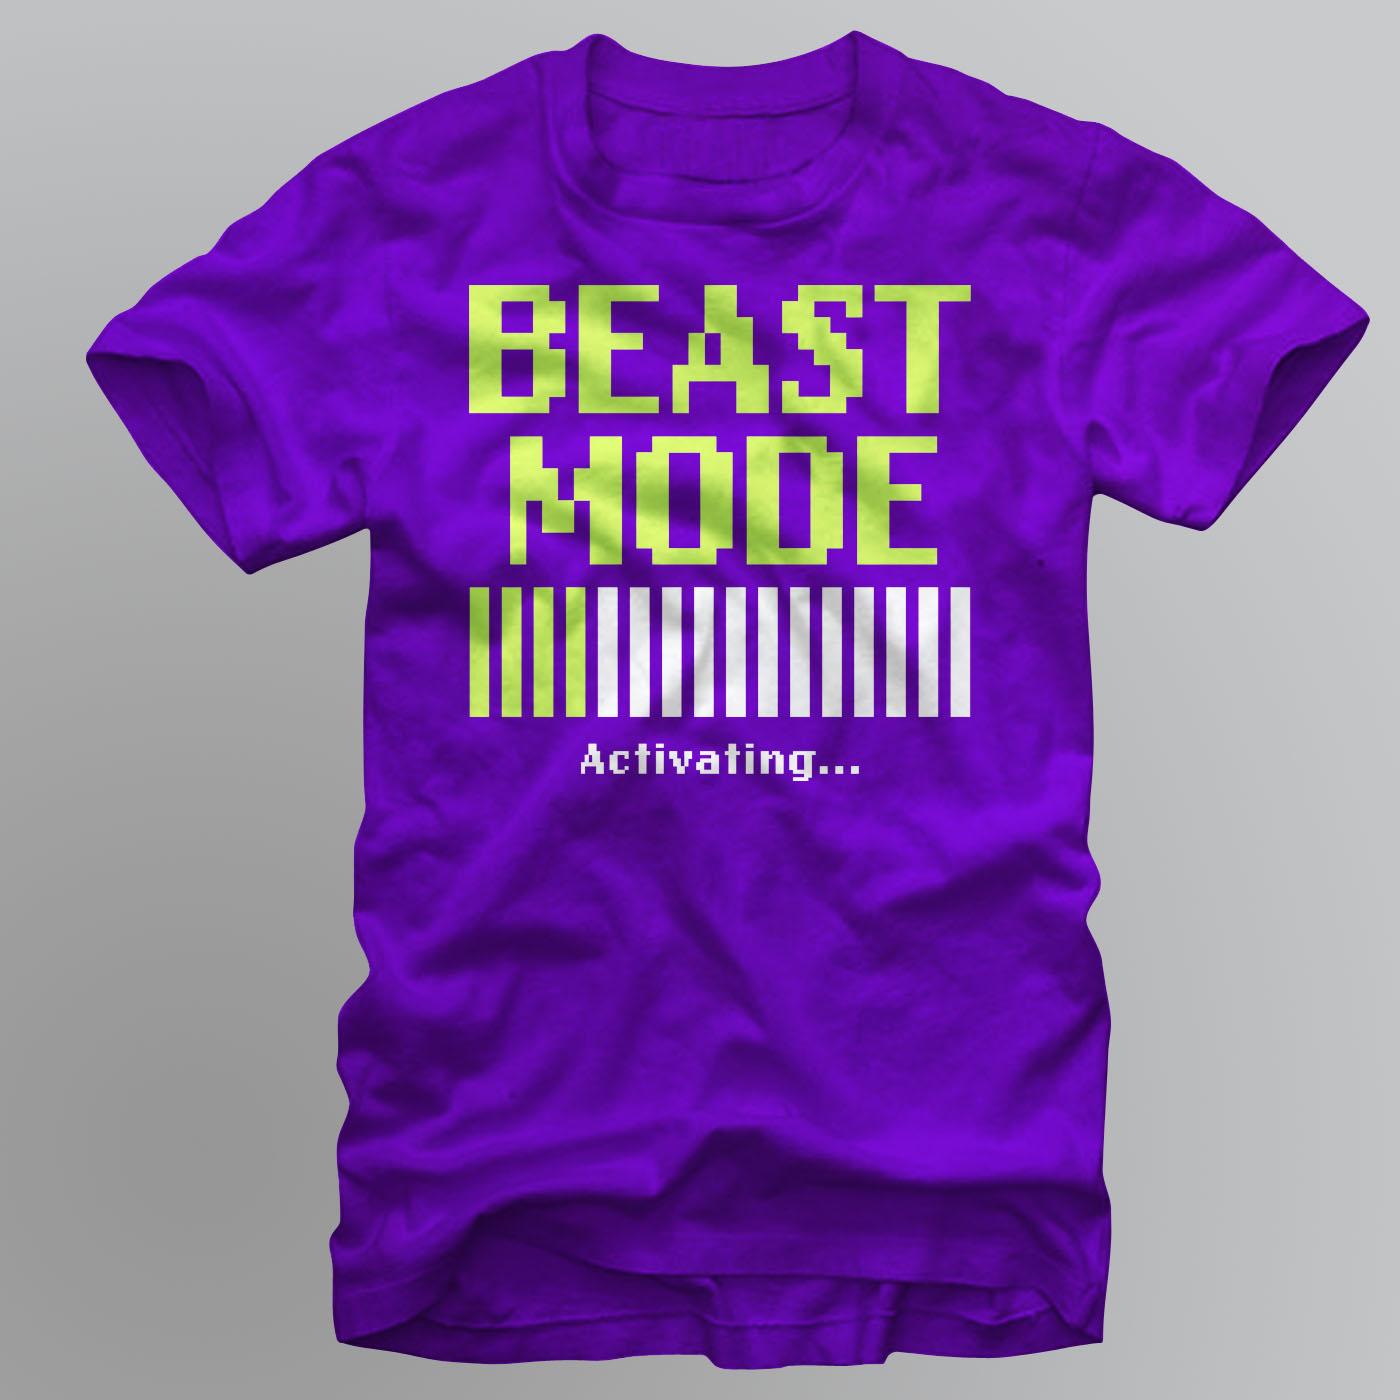 Men's Graphic T-Shirt - Beast Mode